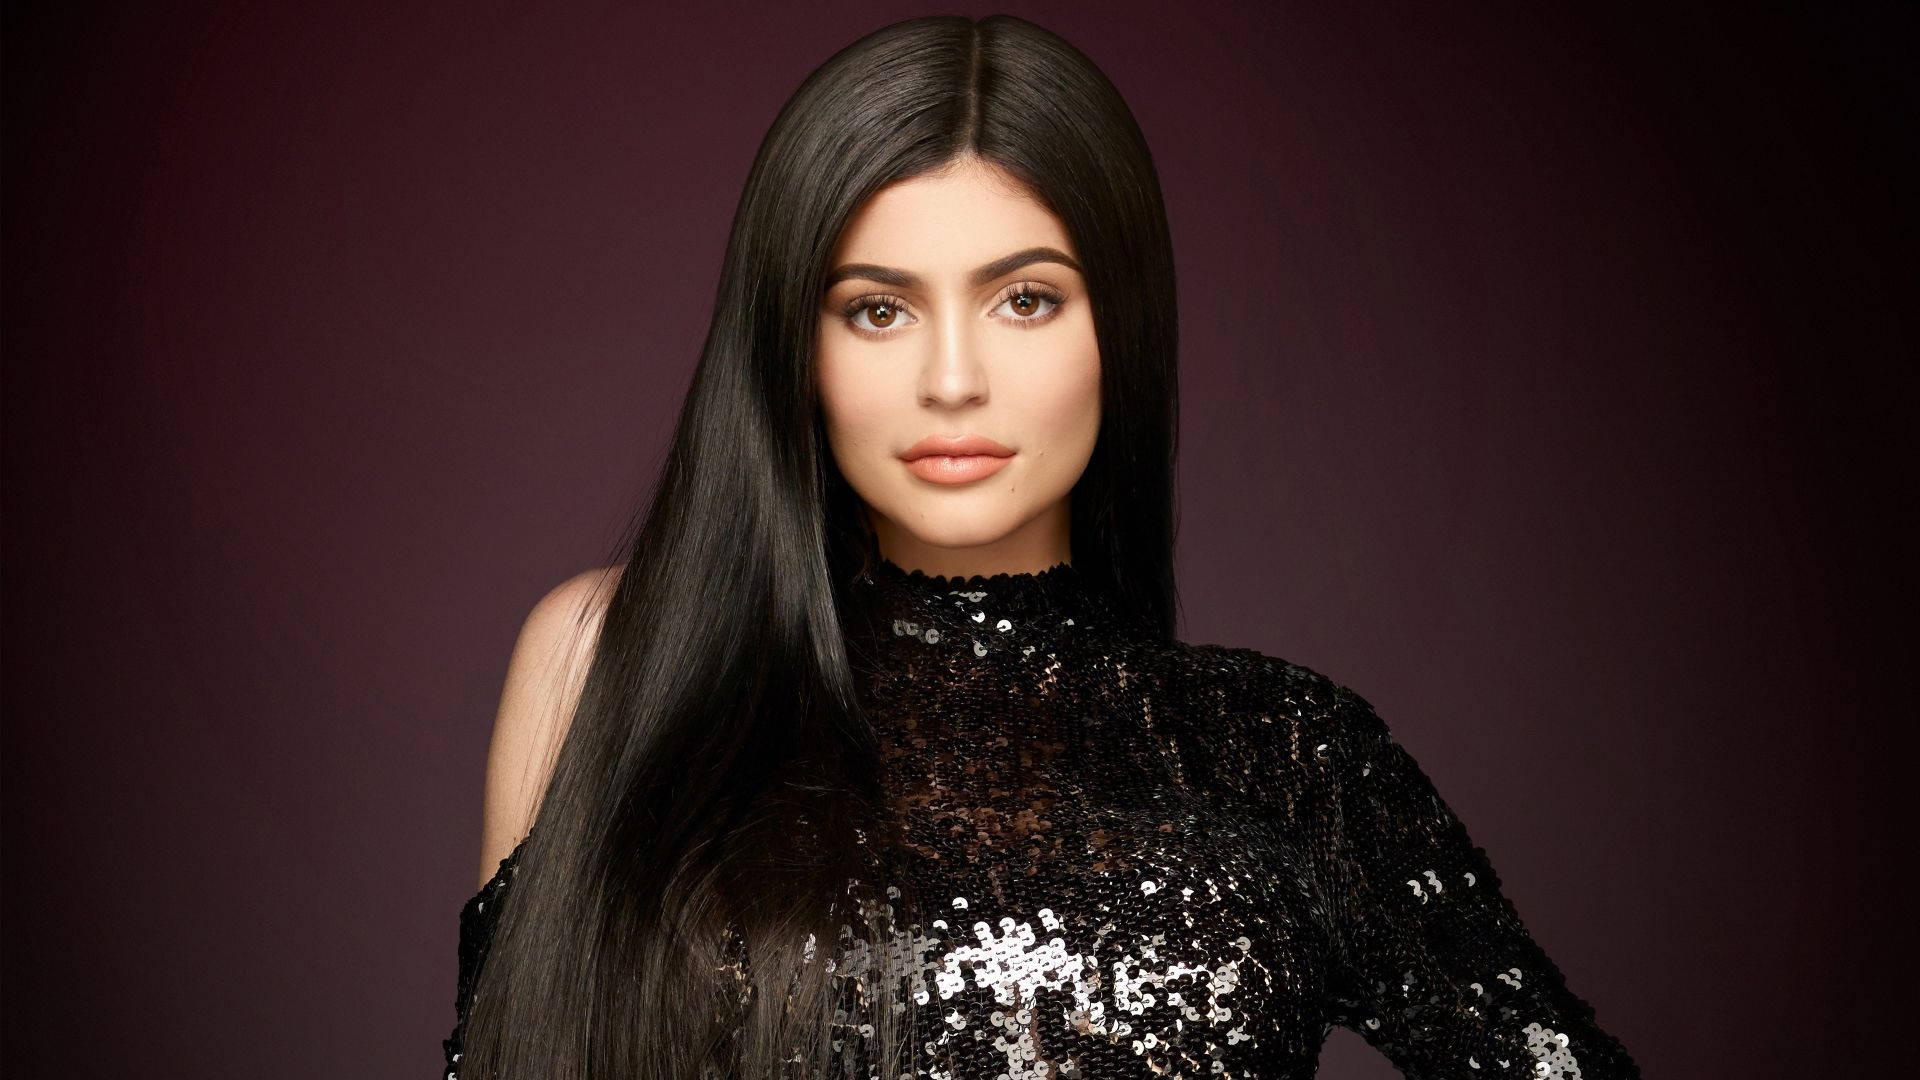 Kylie Jenner In Black Sequined Dress Background